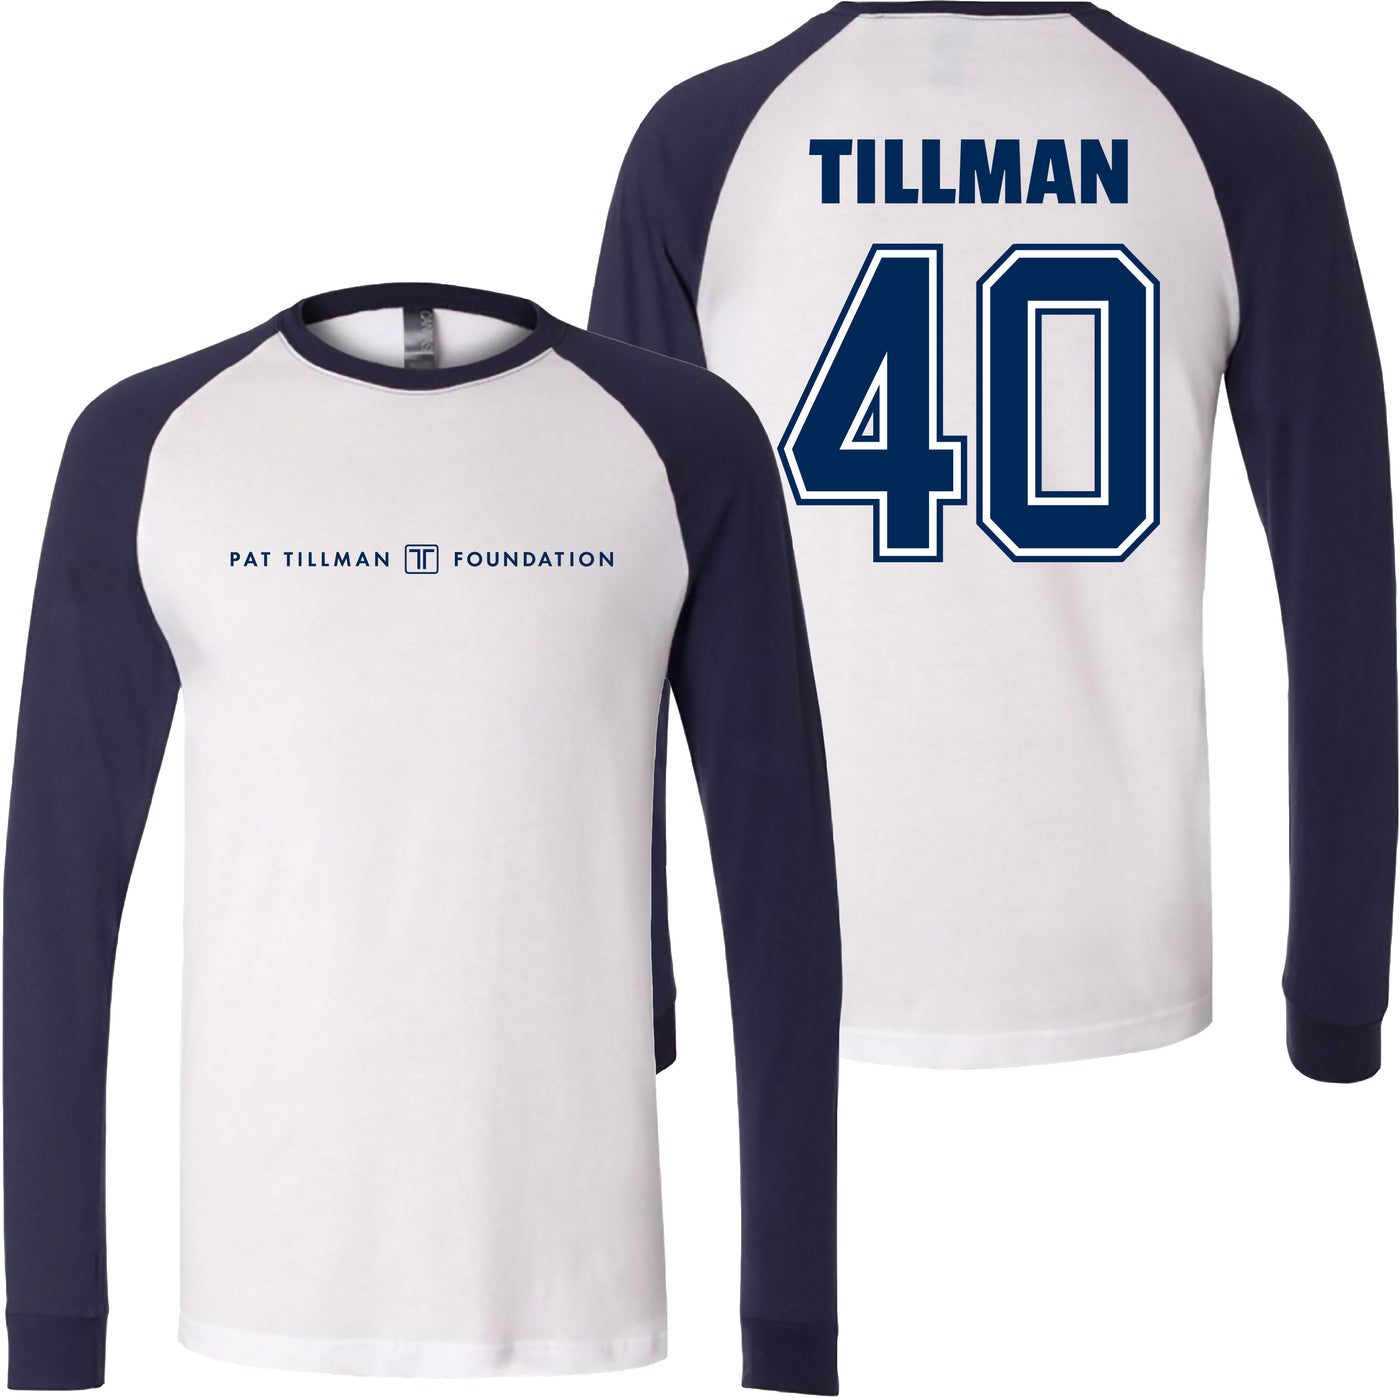 Tillman "40" Baseball Tee